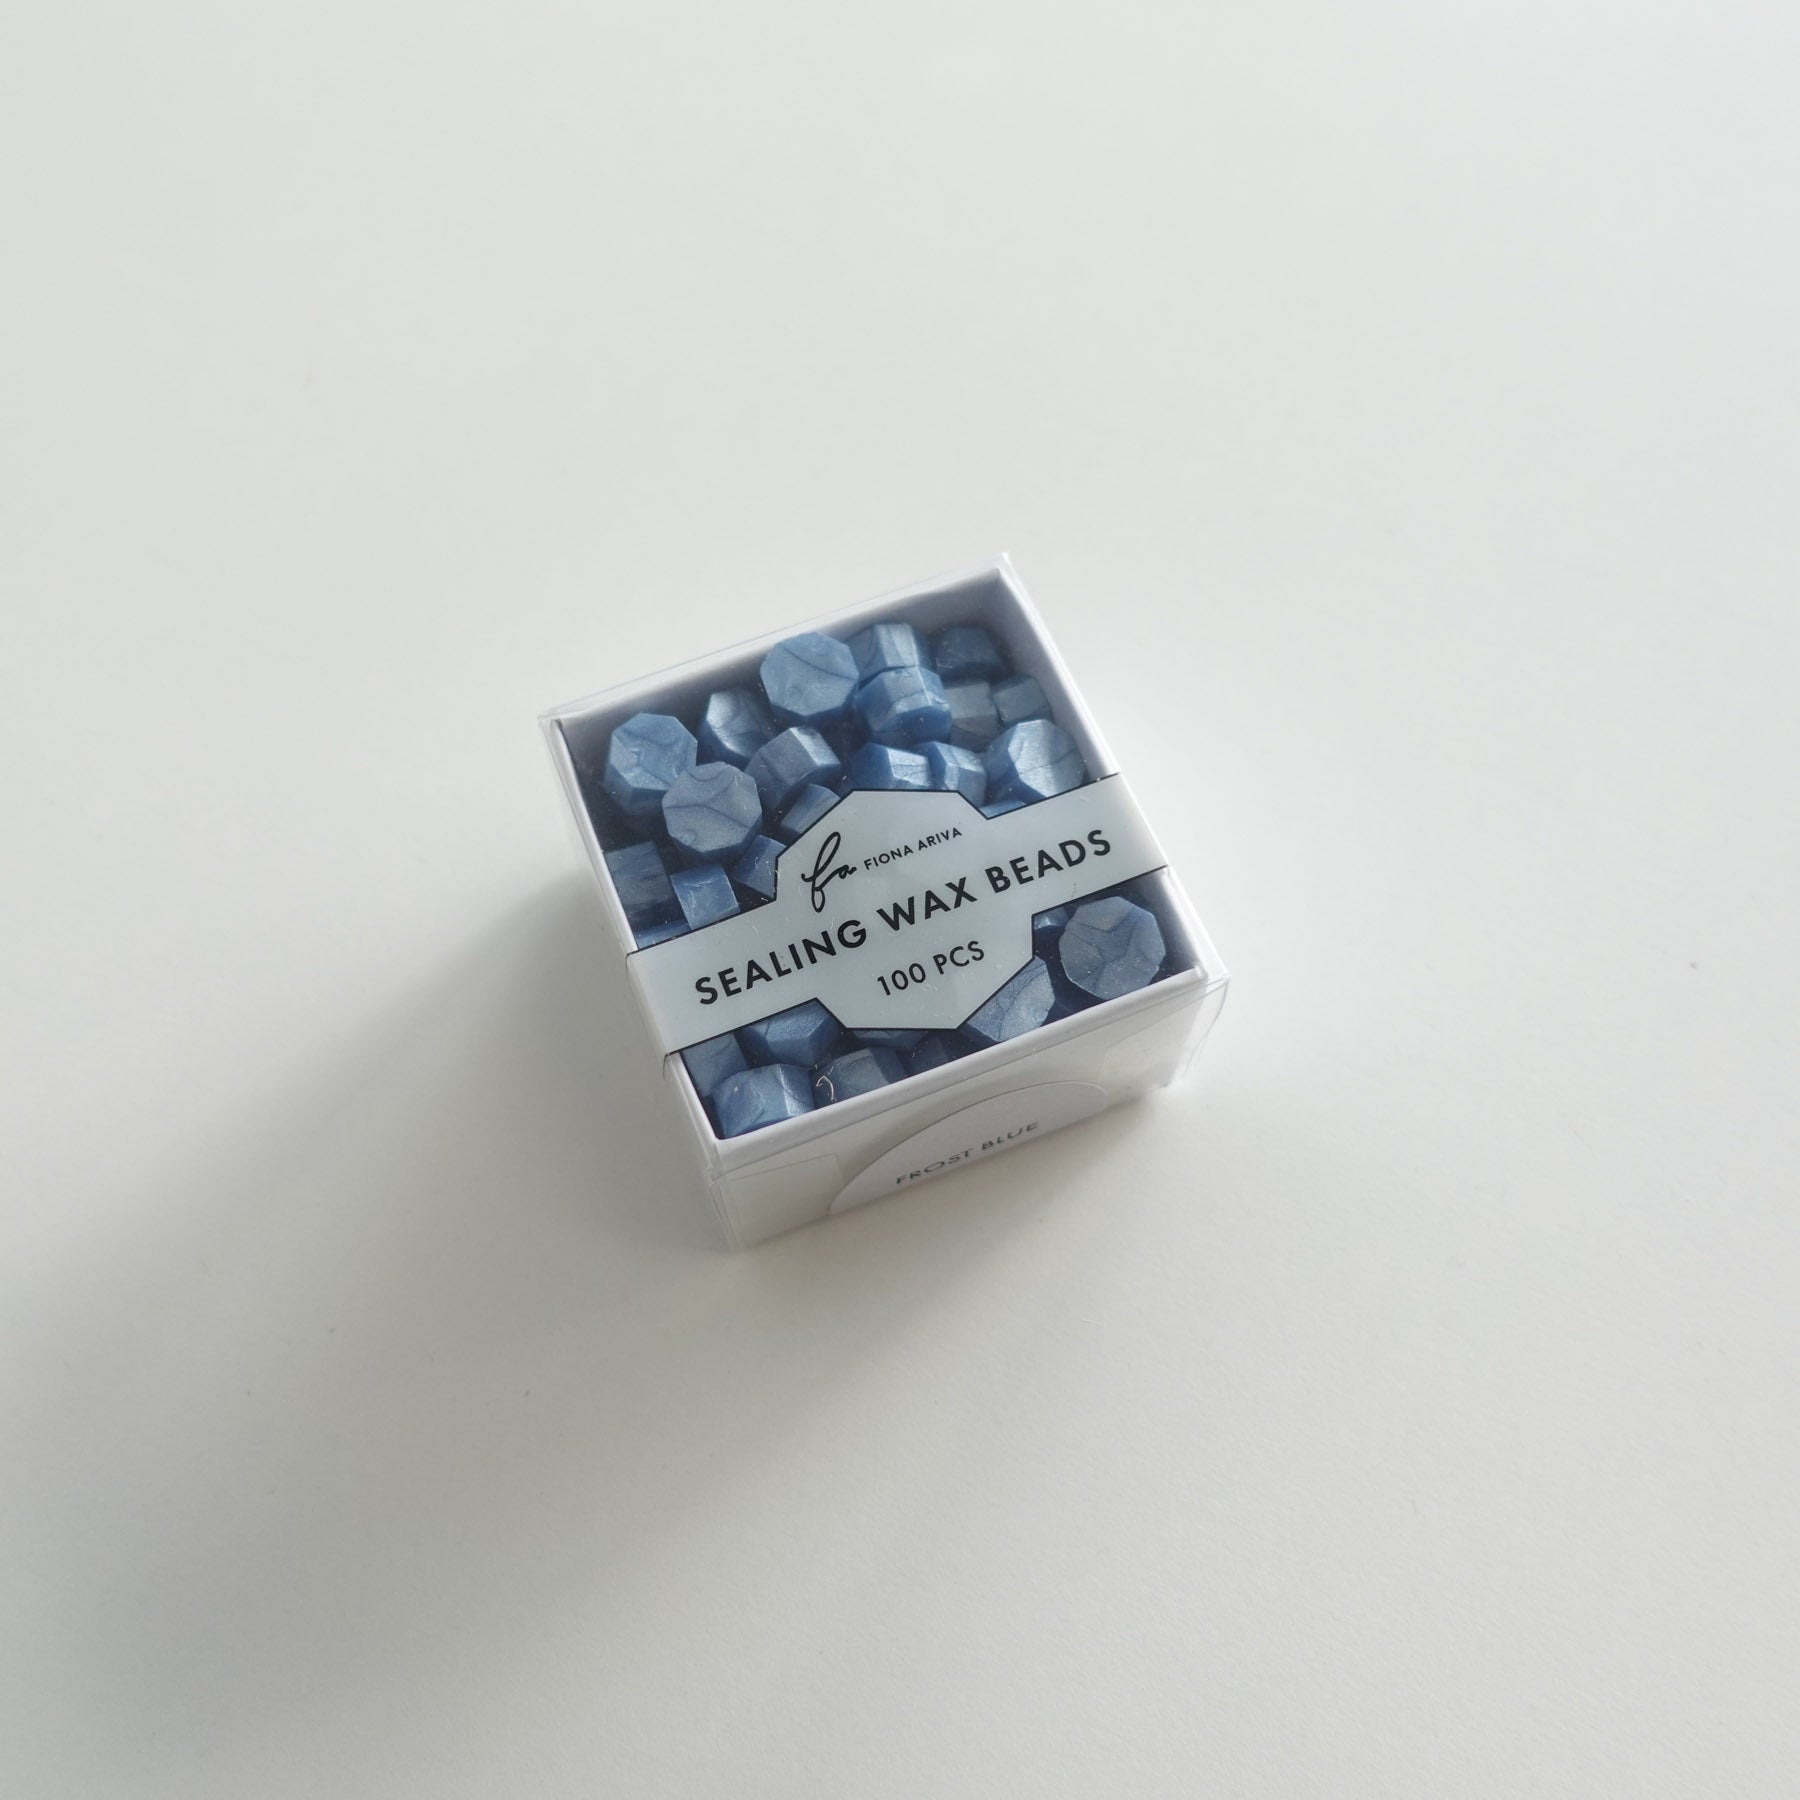 fiona ariva australia sealing wax seal beads light pale frost blue